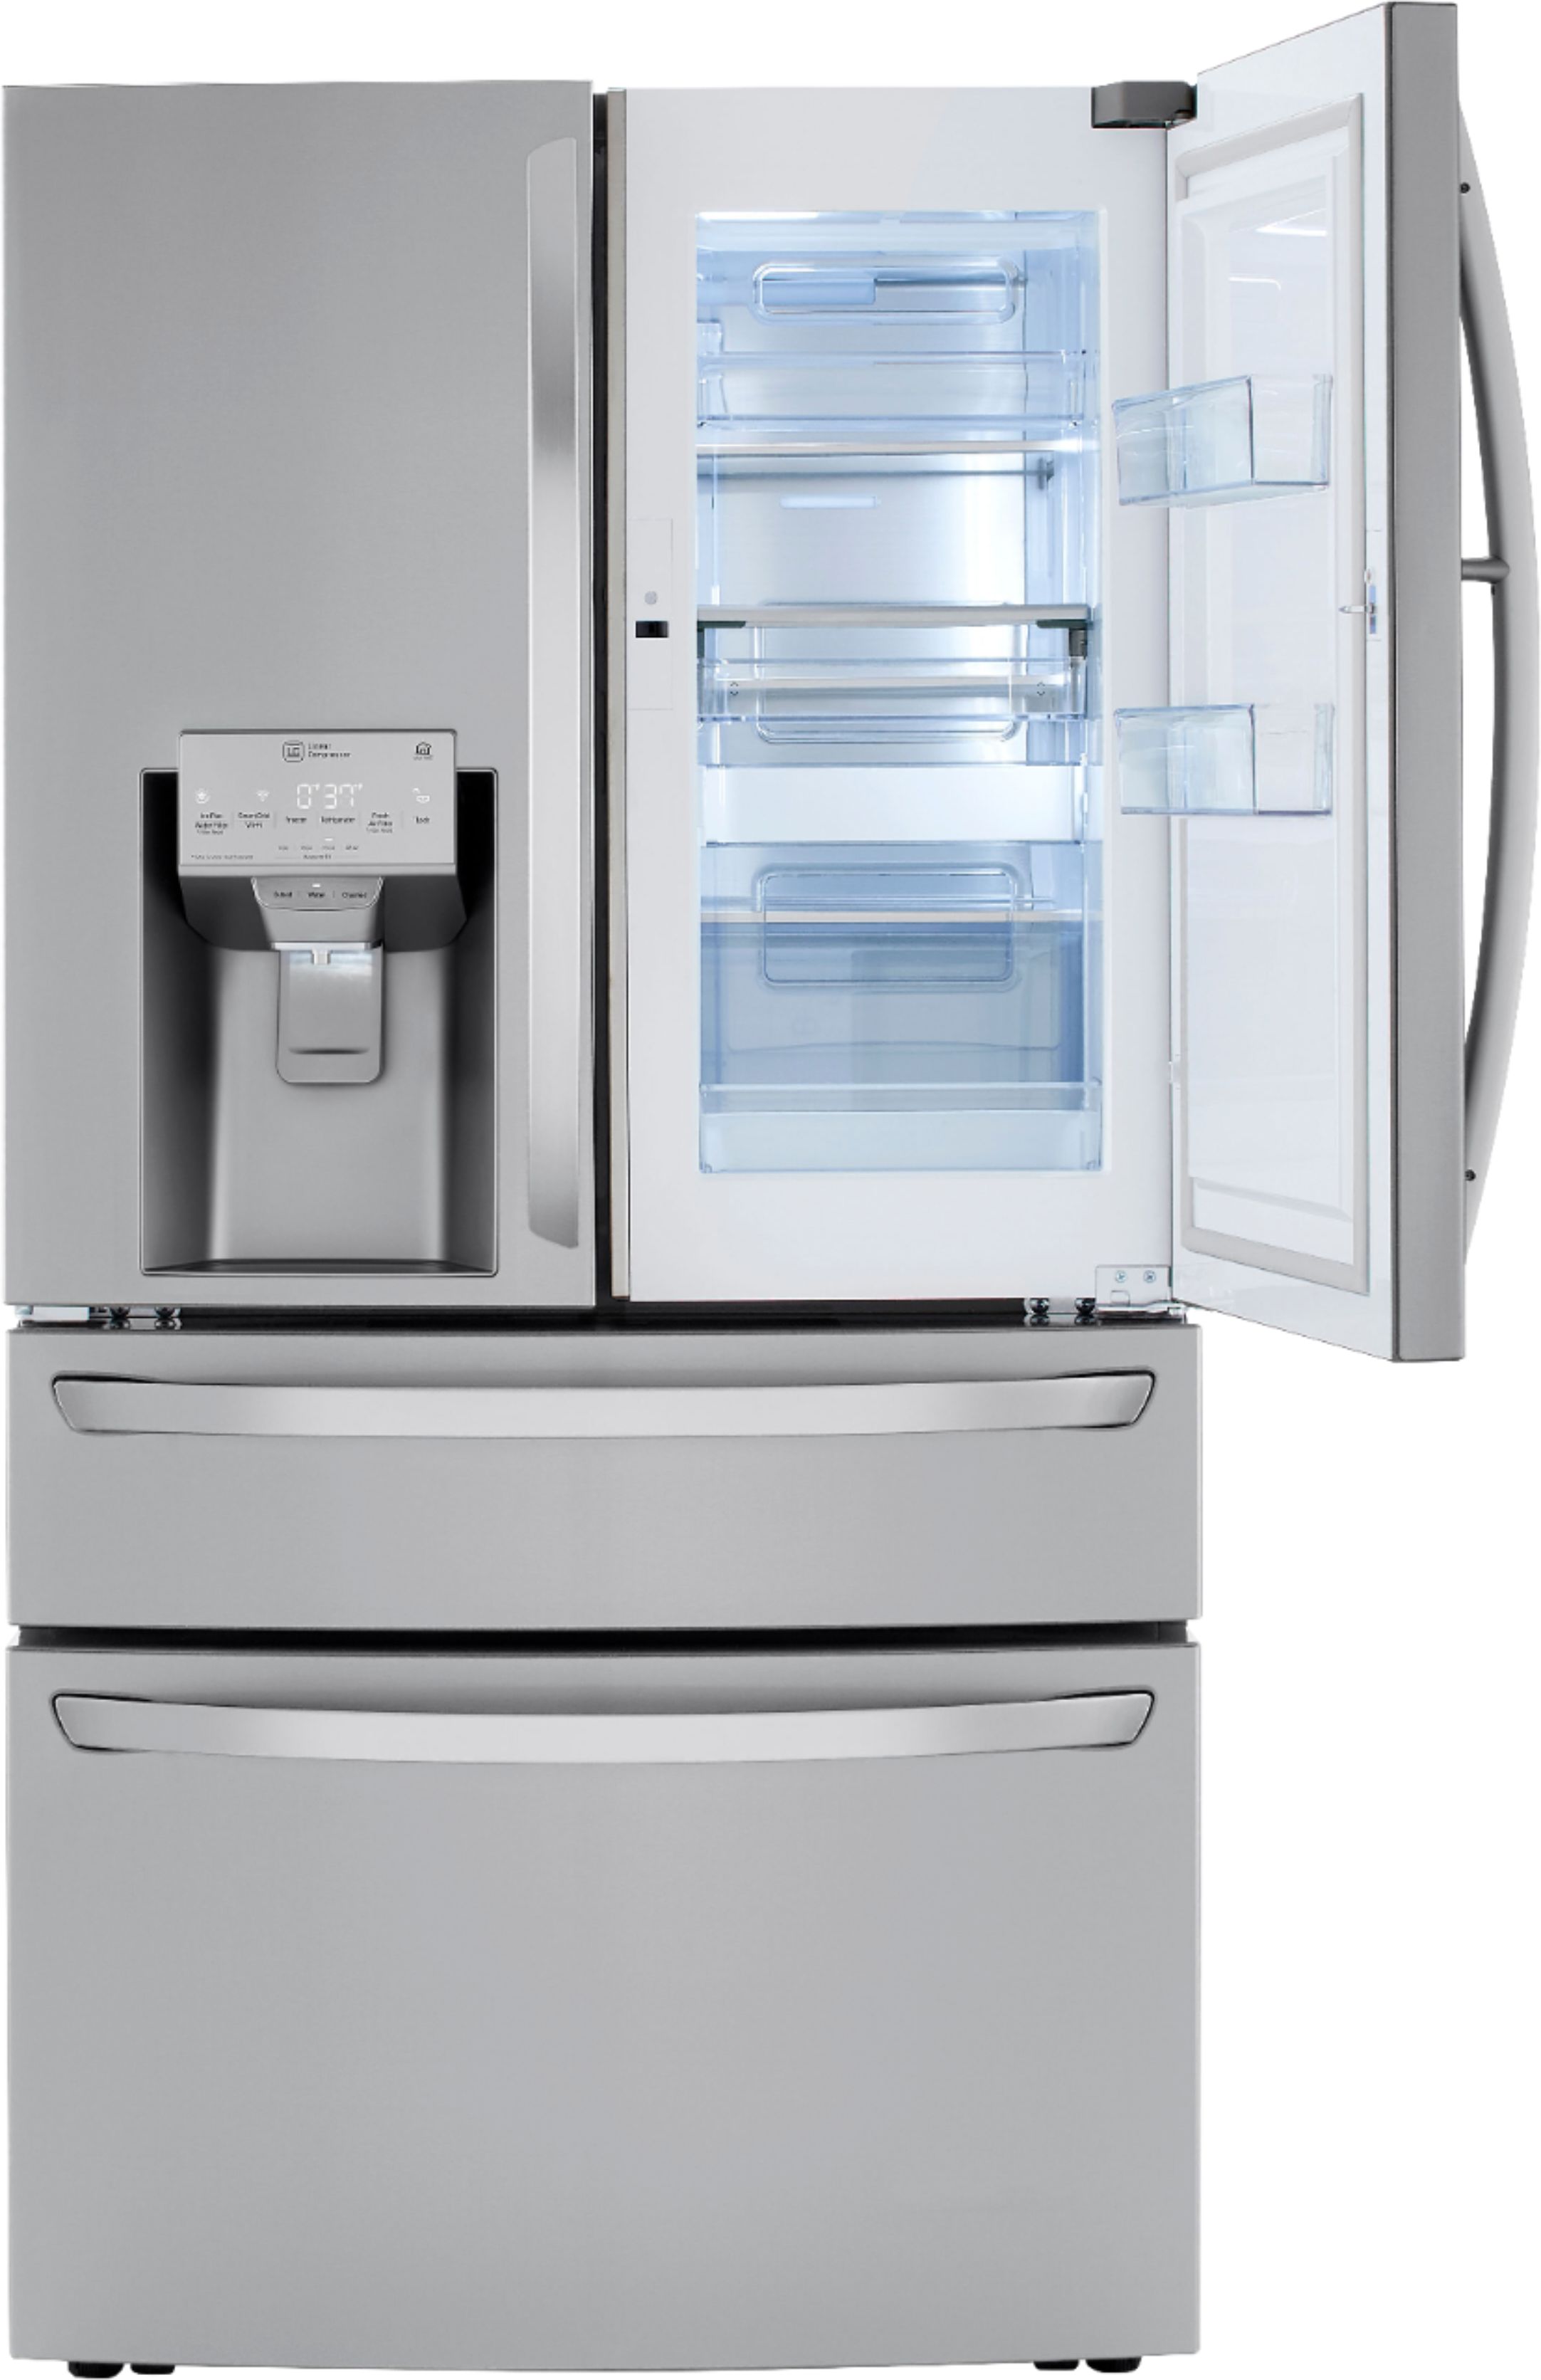 LG LRMDC2306D: 29 cu ft. French Door Refrigerator with Slim Design